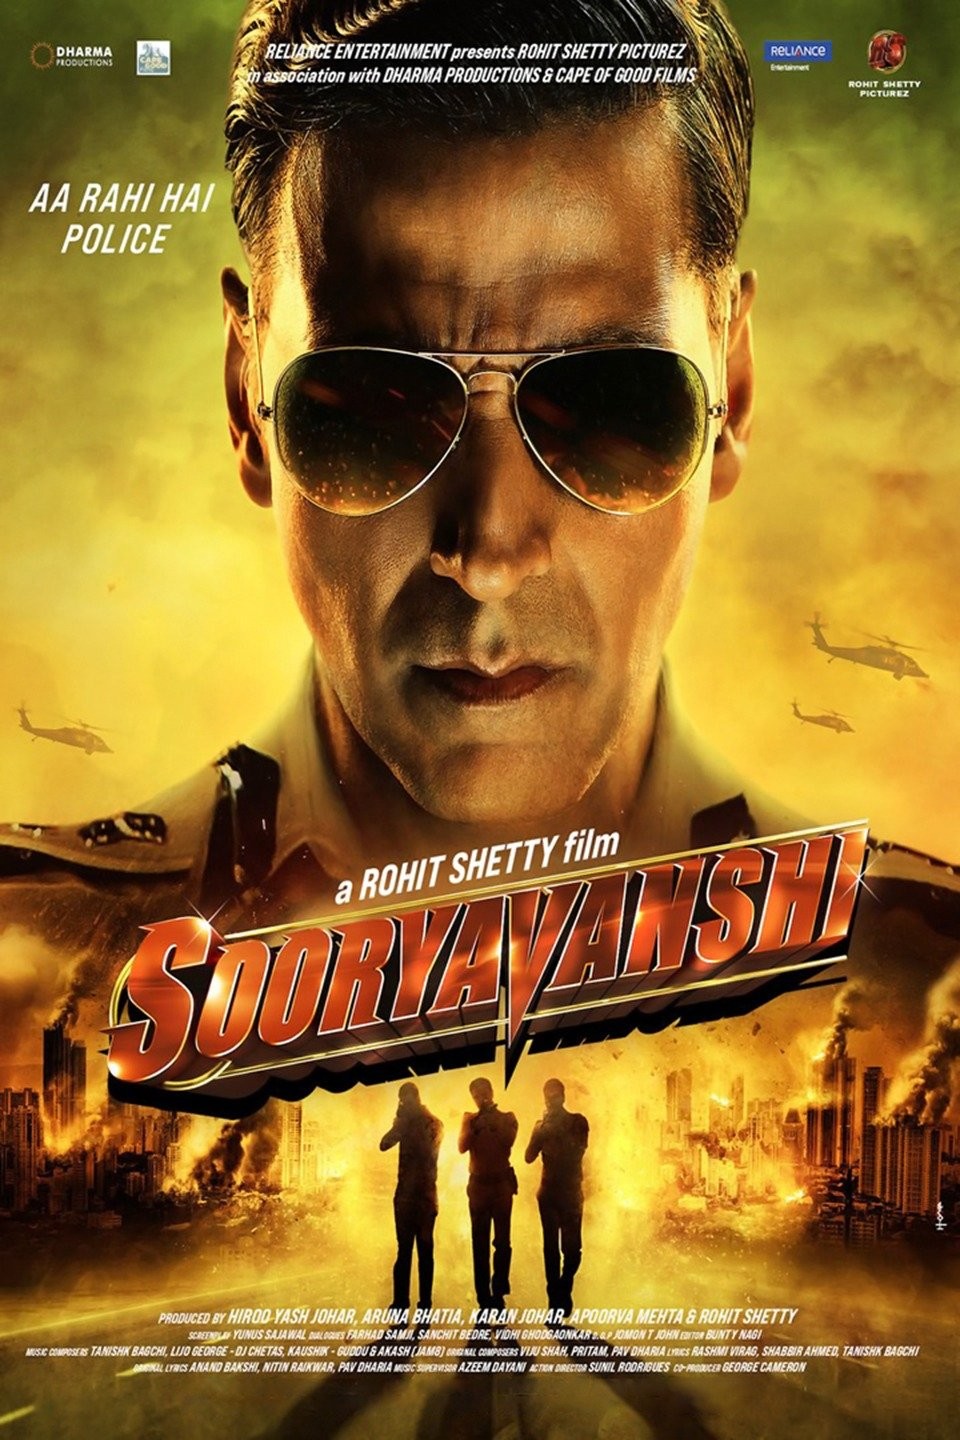 Sooryavanshi full HD movie leaked online; Akshay Kumar – Katrina Kaif film  available for free download on Tamilrockers, Telegram and other sites